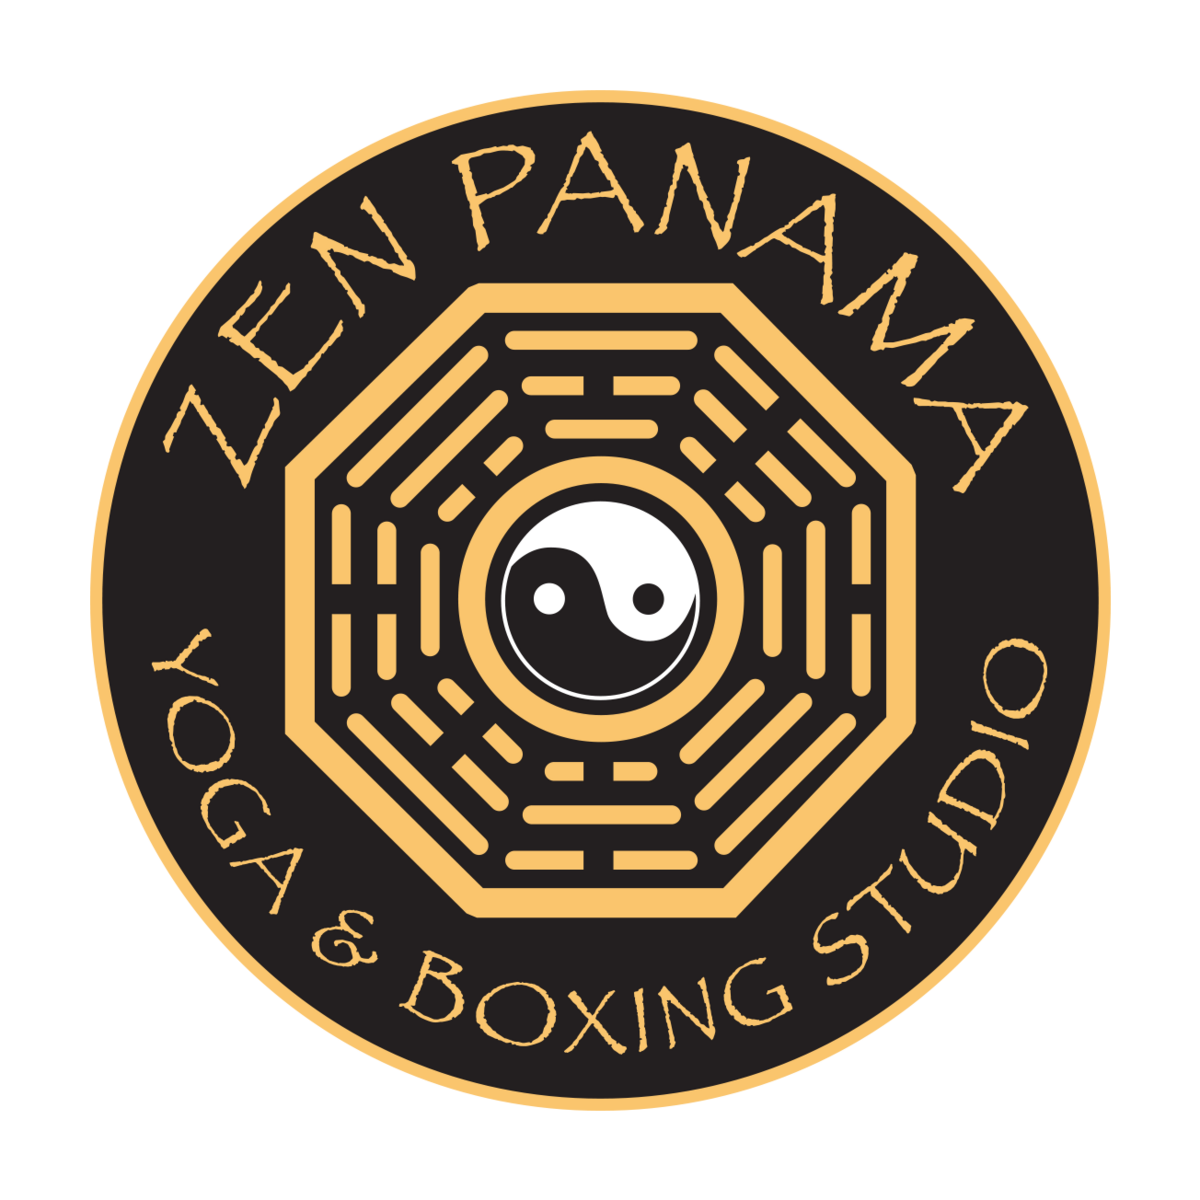 zen_panama_BOXING_logo_master_GOLD